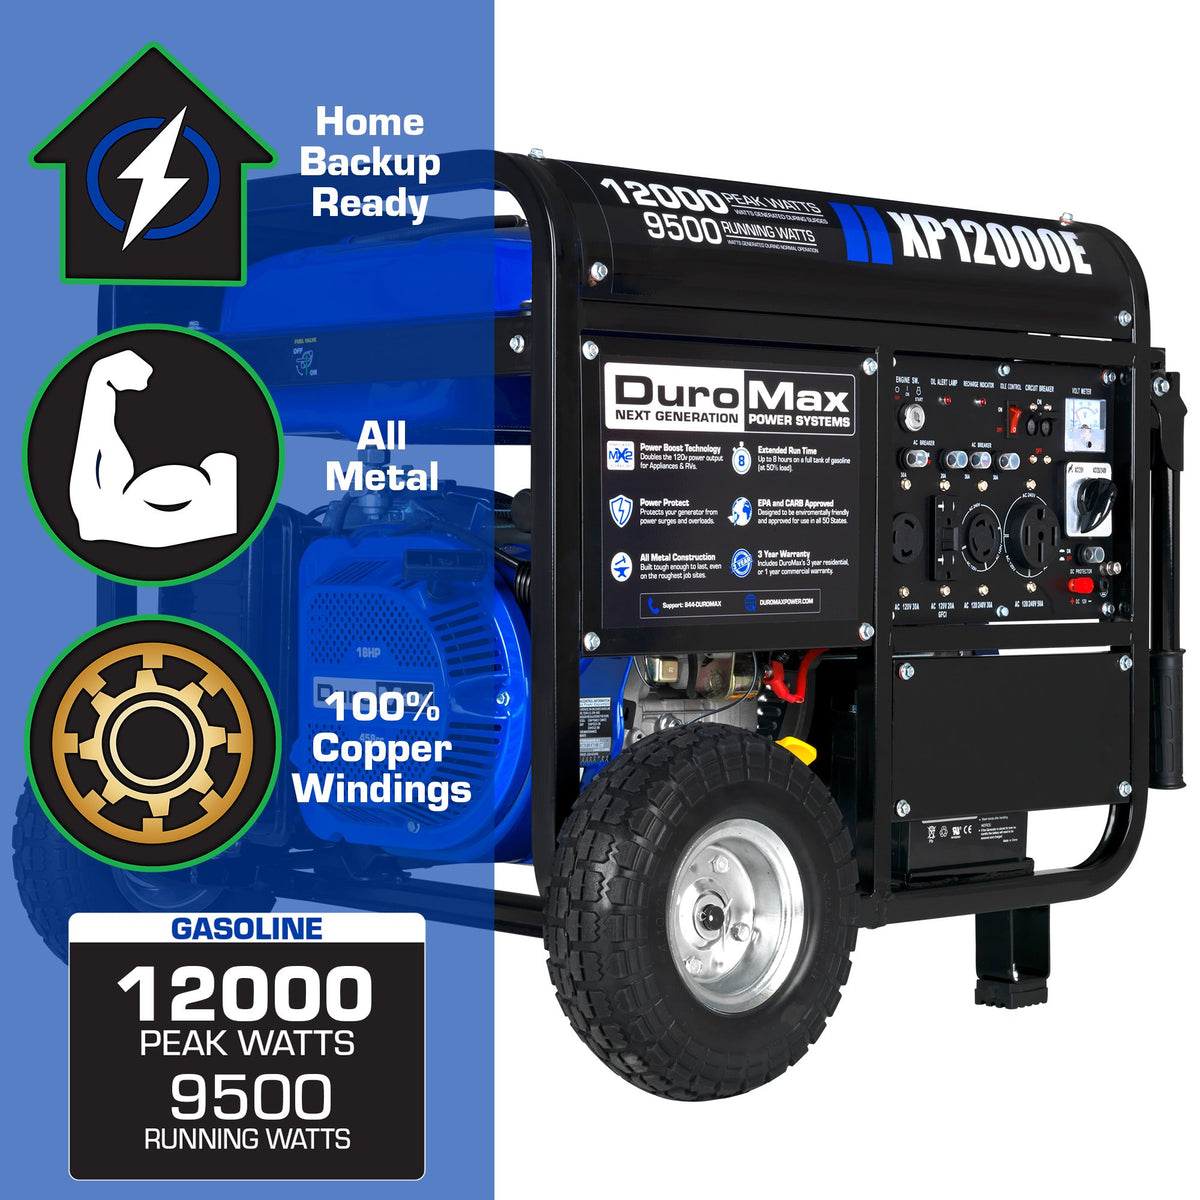 DuroMax XP12000E 9500W/12000W Gas Electric Start Generator New